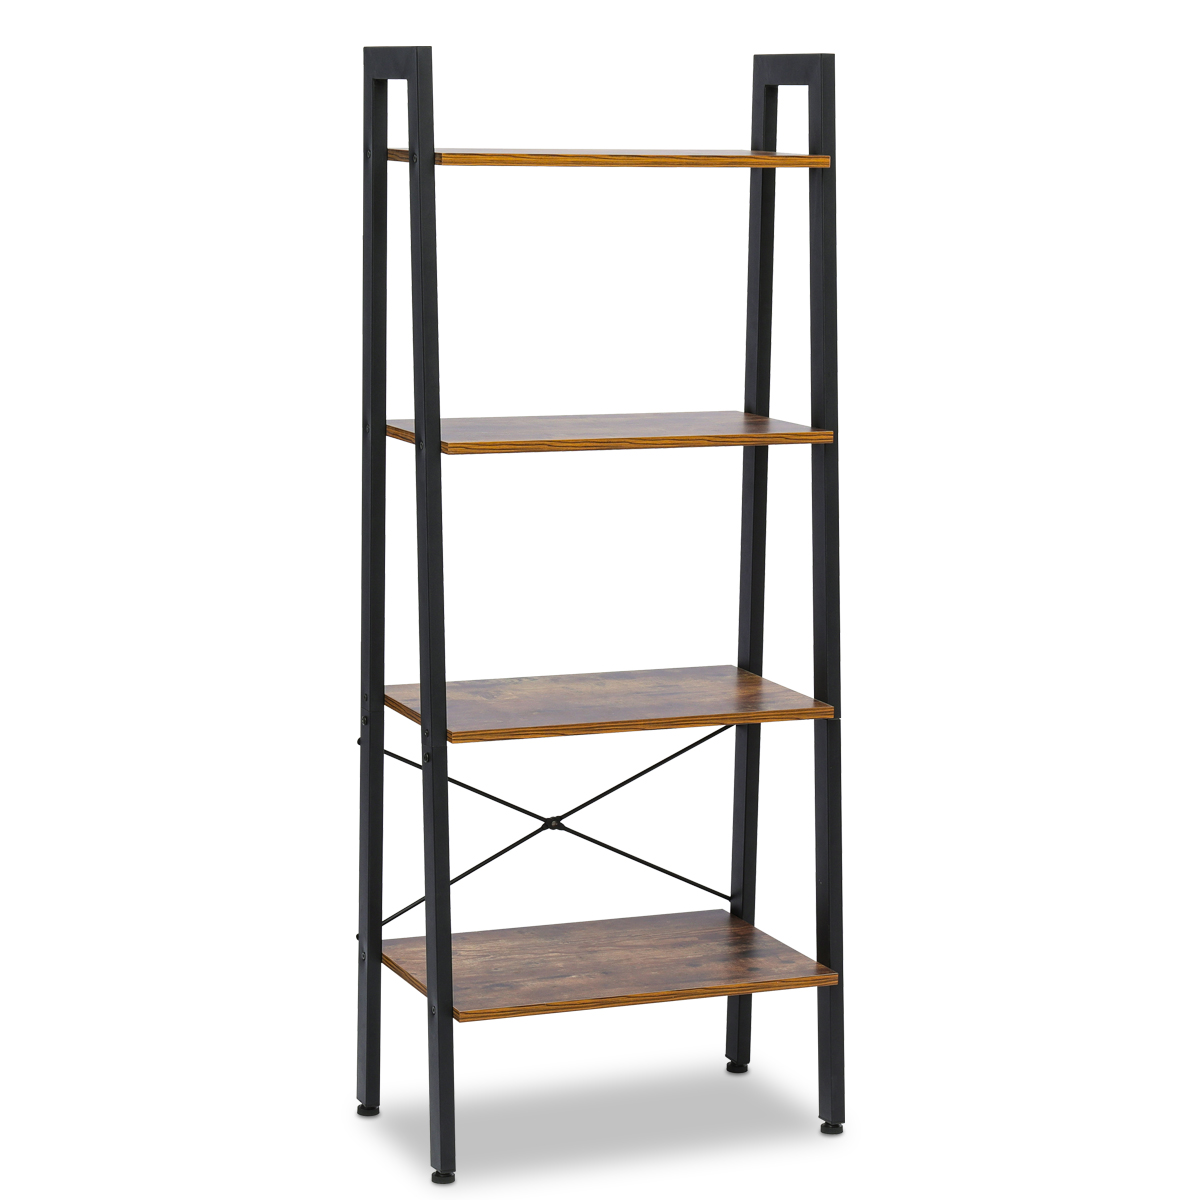 

Vintage Wooden 4-Tier Bookshelf Industrial Ladder Shelf Rustic Storage Rack with Wood Look and Metal Frame